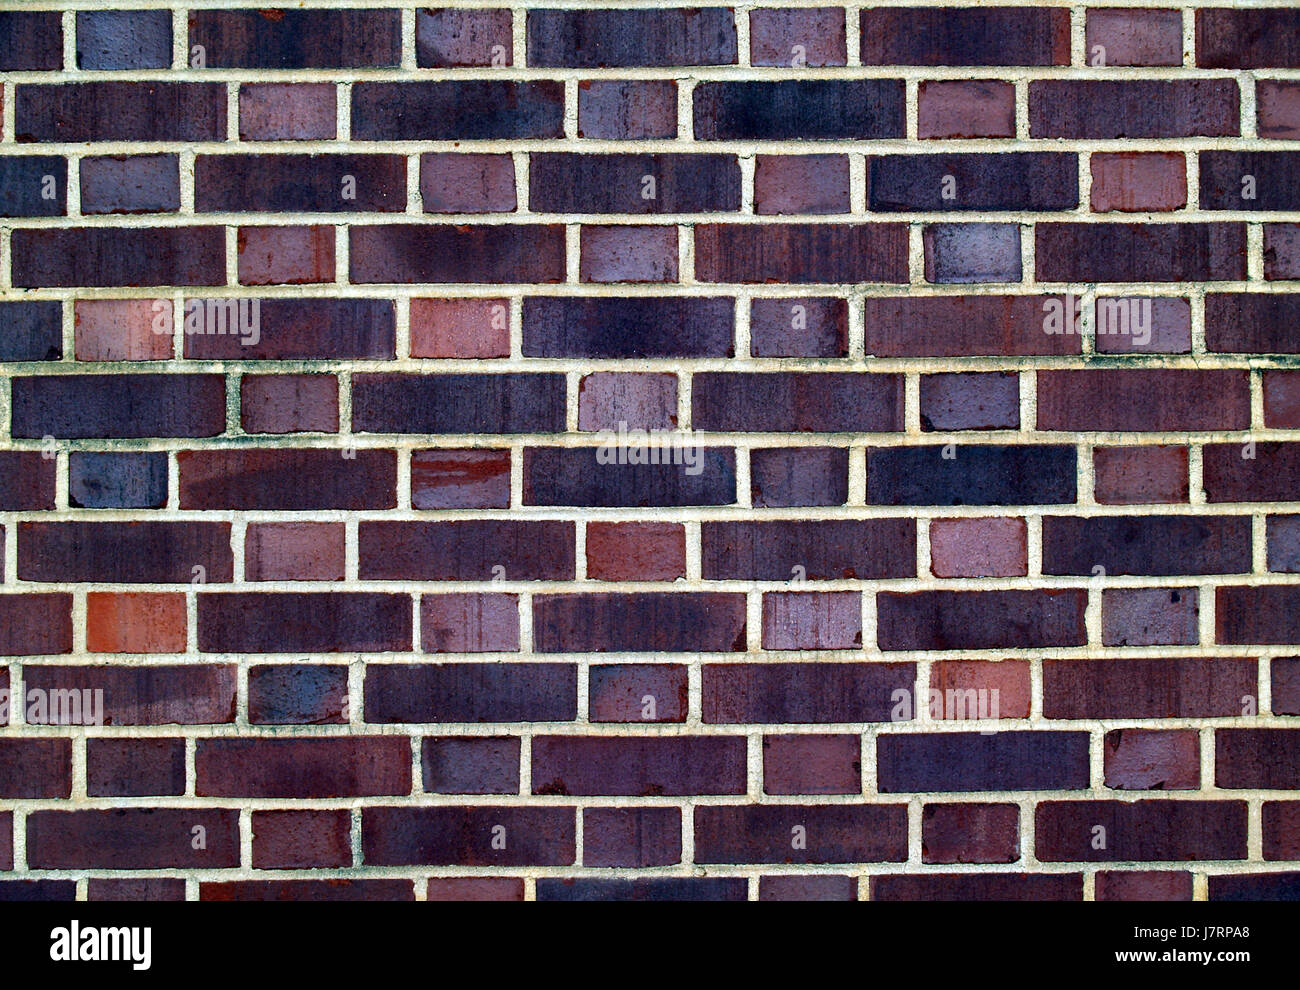 brown brownish brunette black swarthy jetblack deep black wall brick backdrop Stock Photo